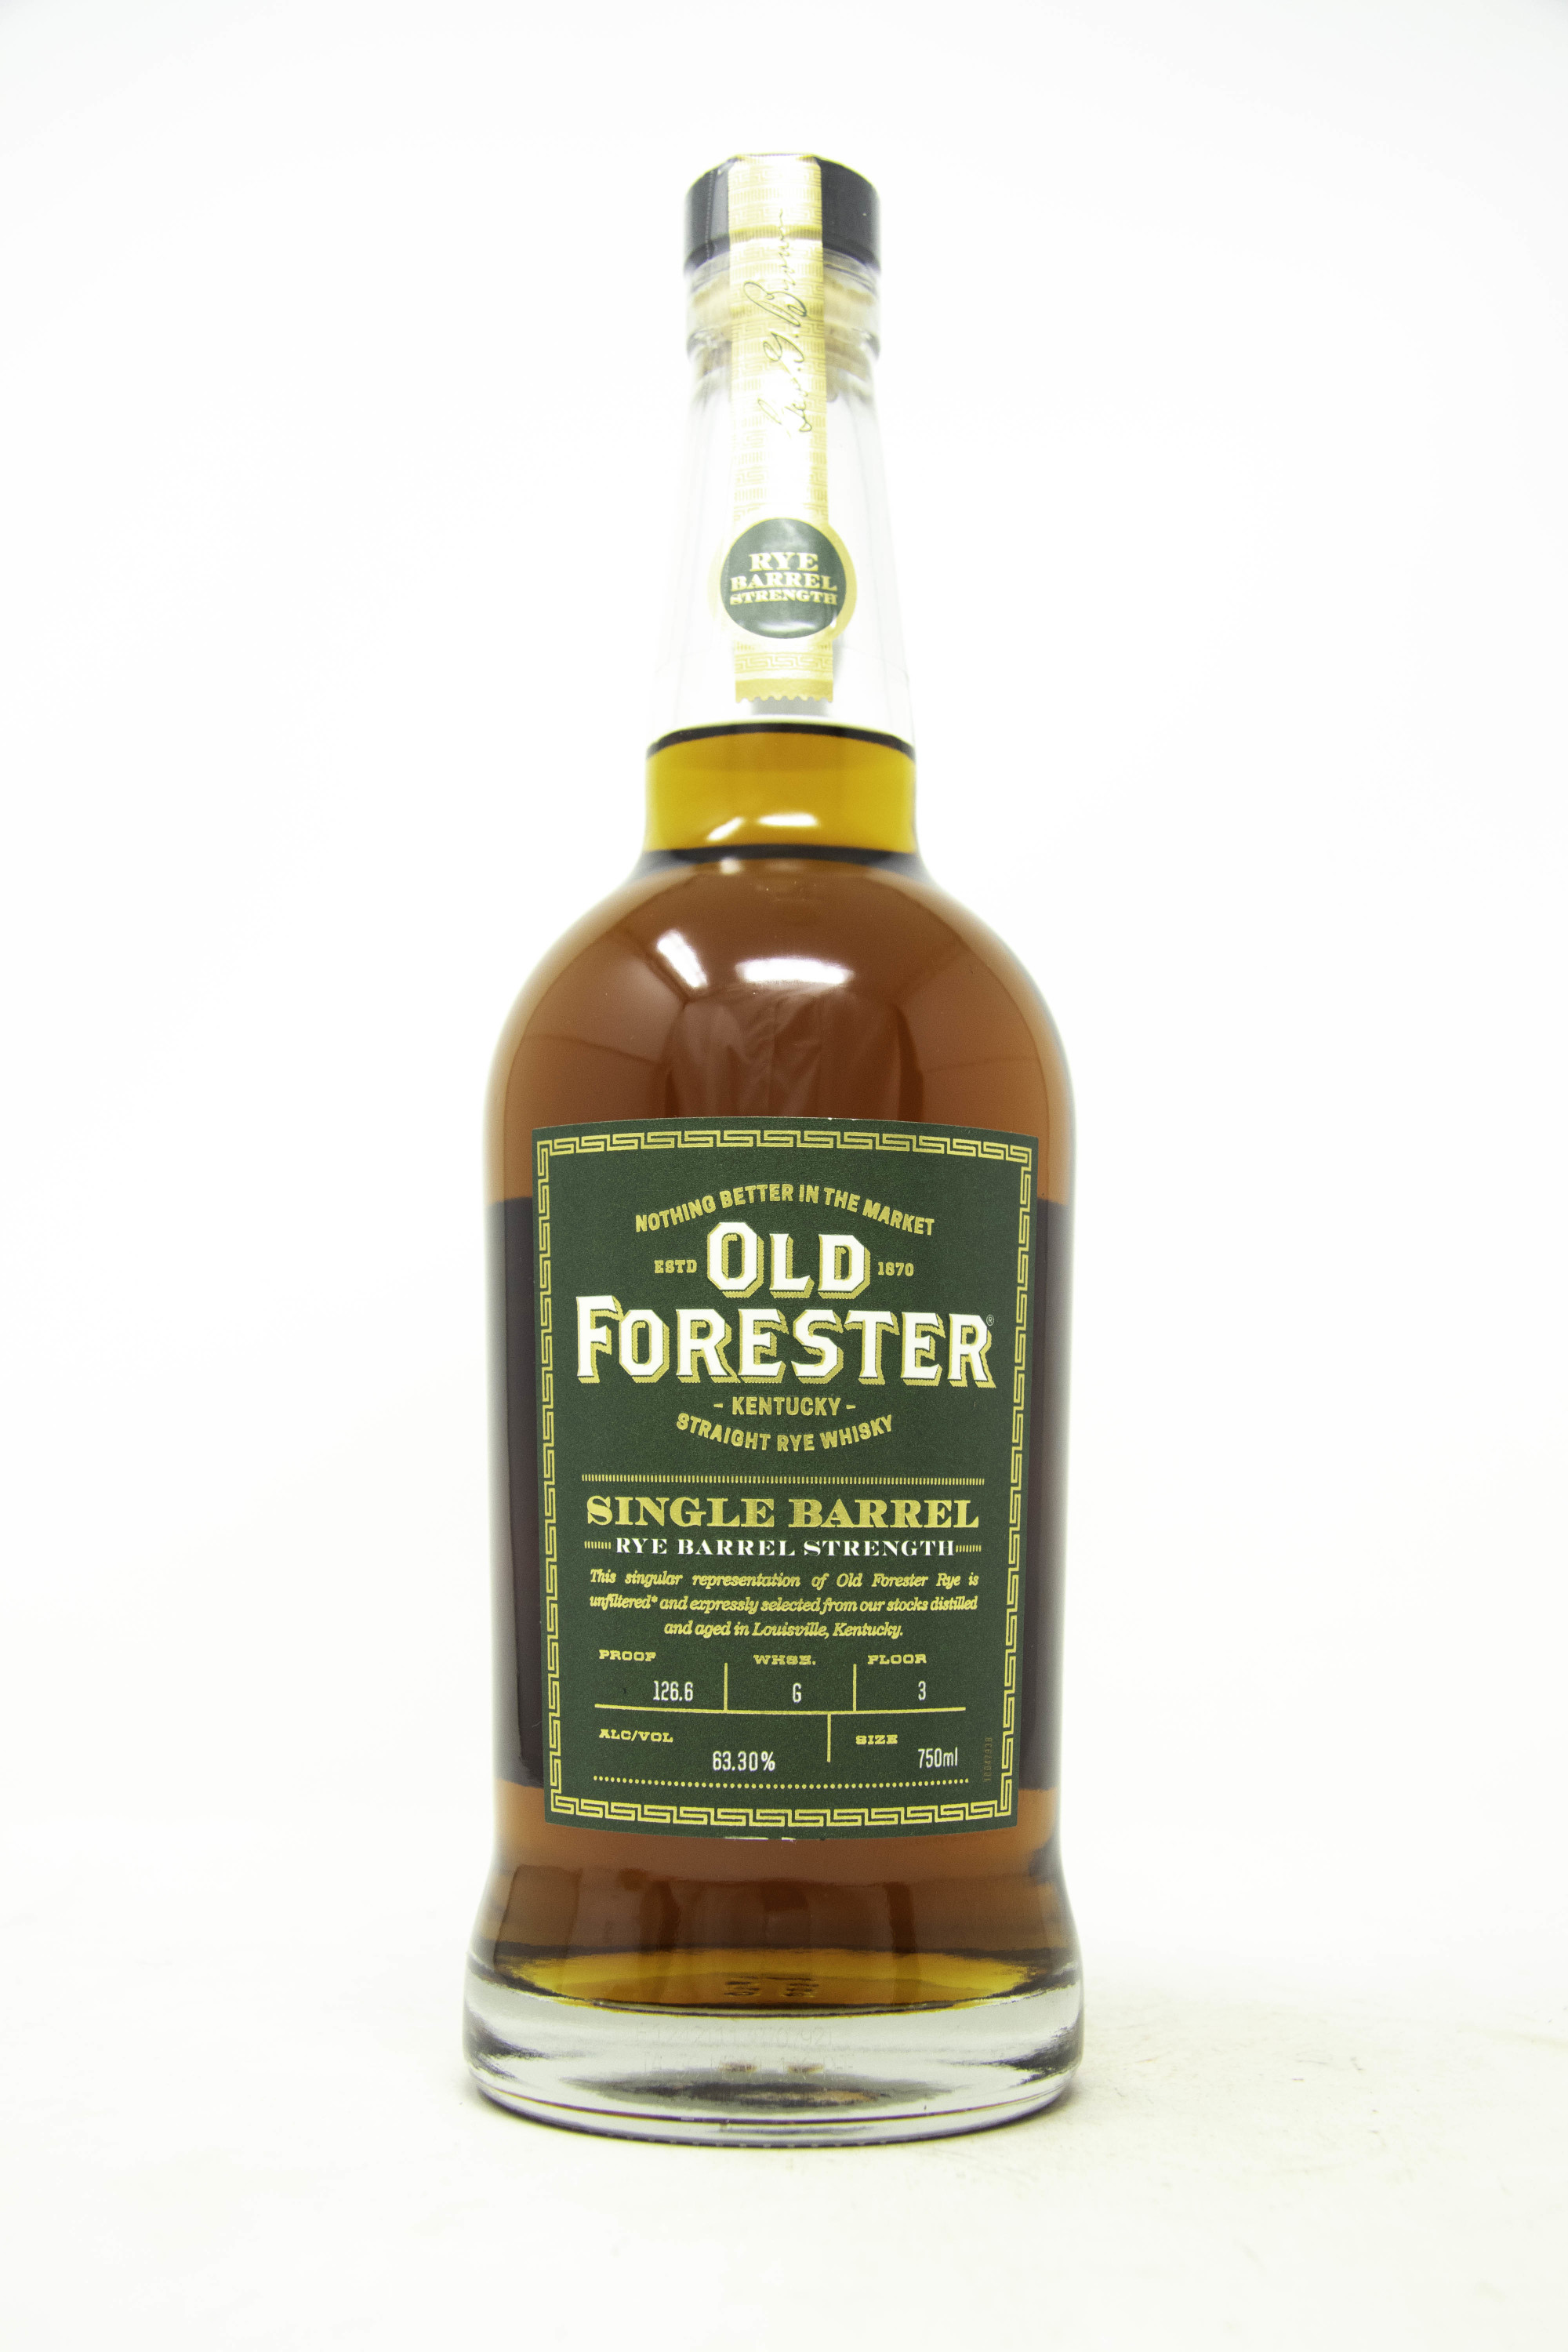 Highland Park Cask Strength Release #4 Single Malt Scotch — Bitters &  Bottles